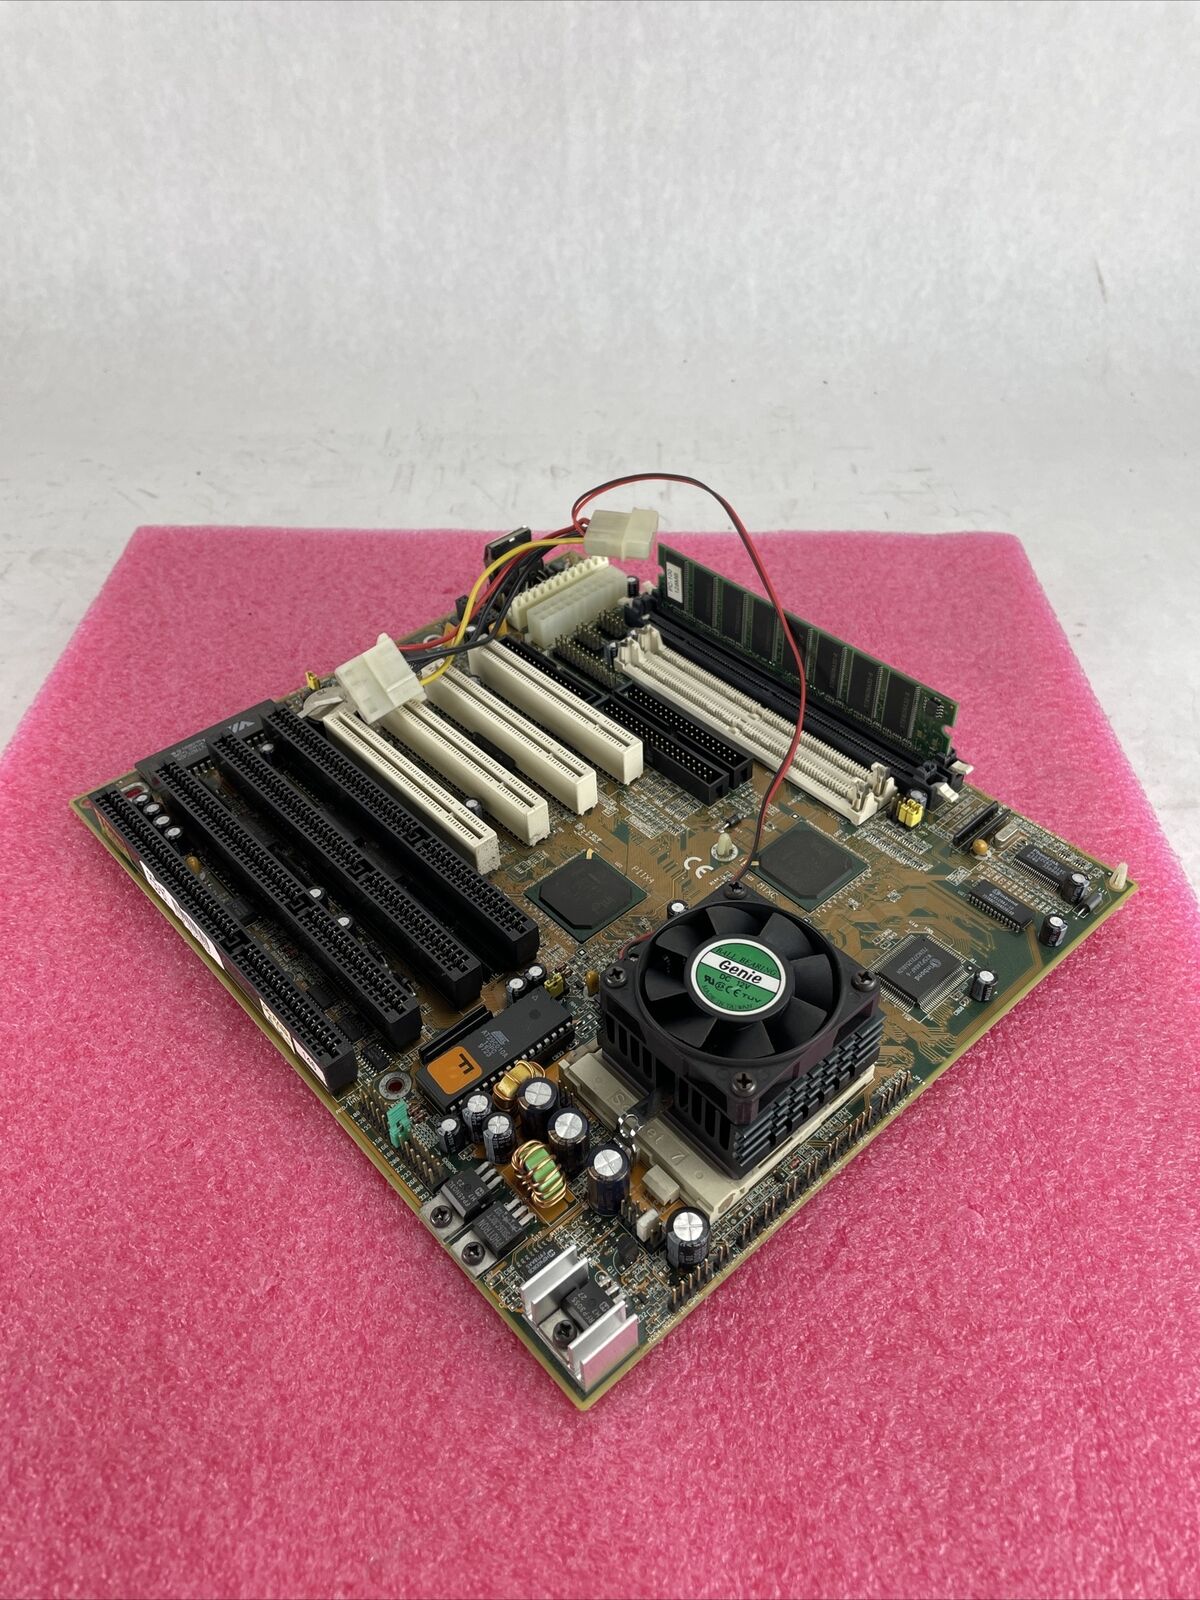 Epox P55-BT Motherboard Cyrix 6X86 150MHz 128MB RAM